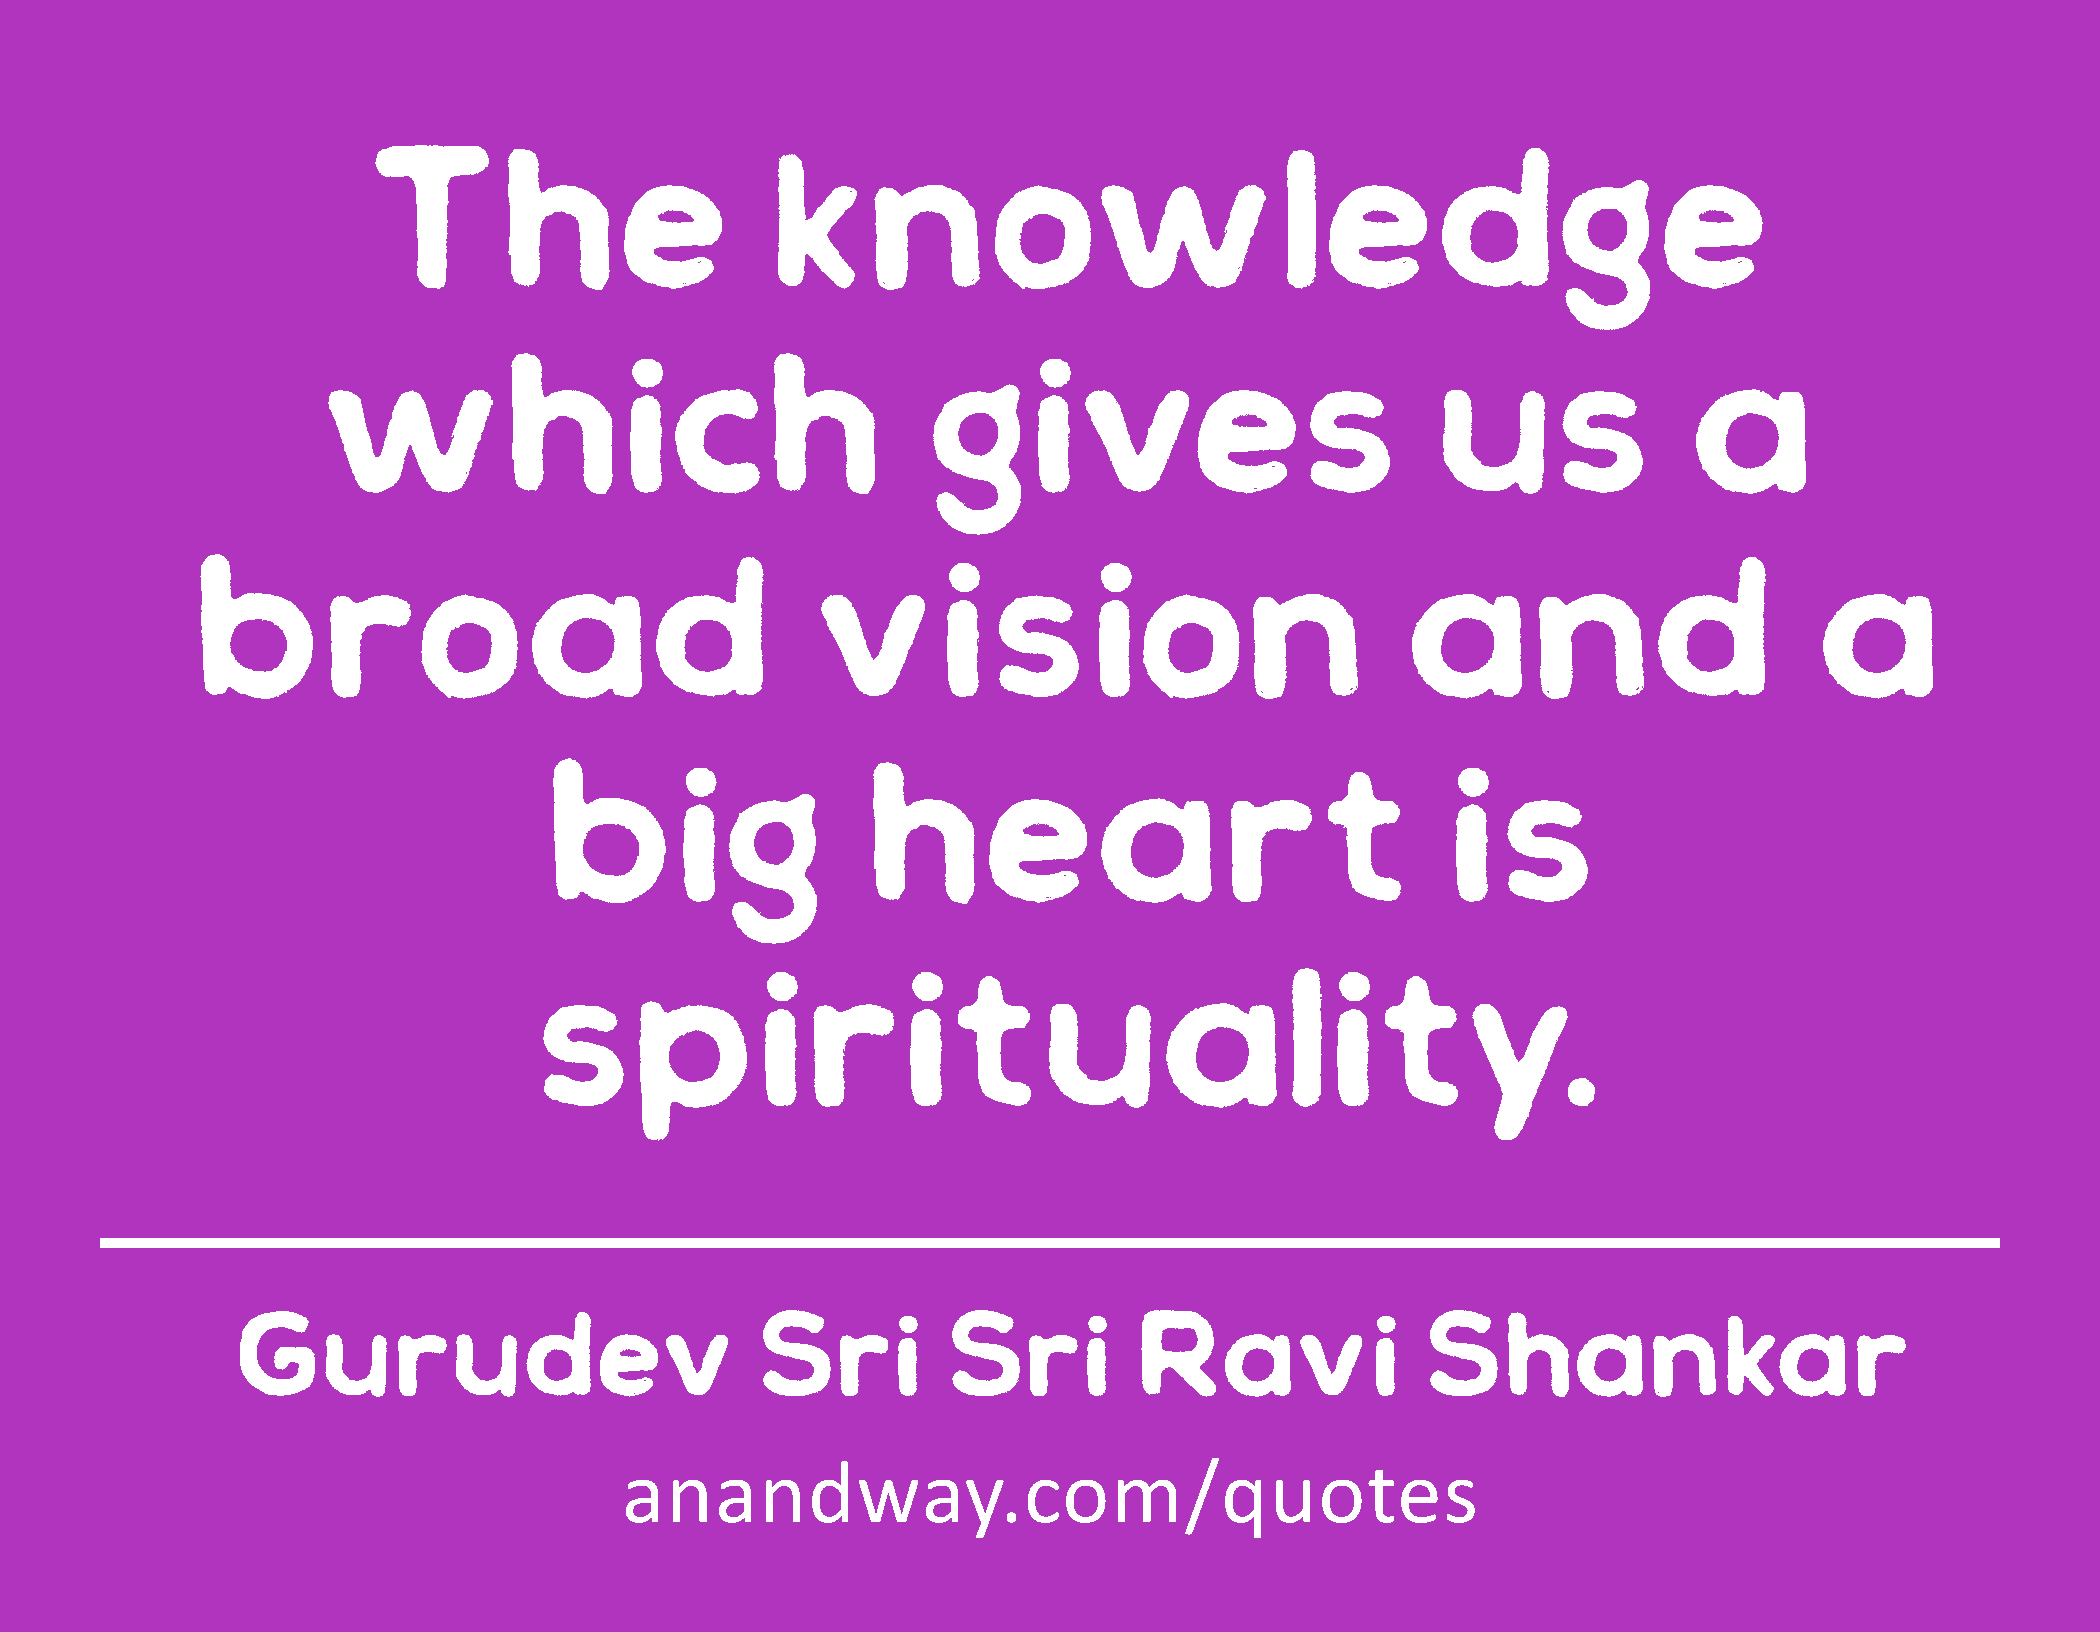 The knowledge which gives us a broad vision and a big heart is spirituality. 
 -Gurudev Sri Sri Ravi Shankar